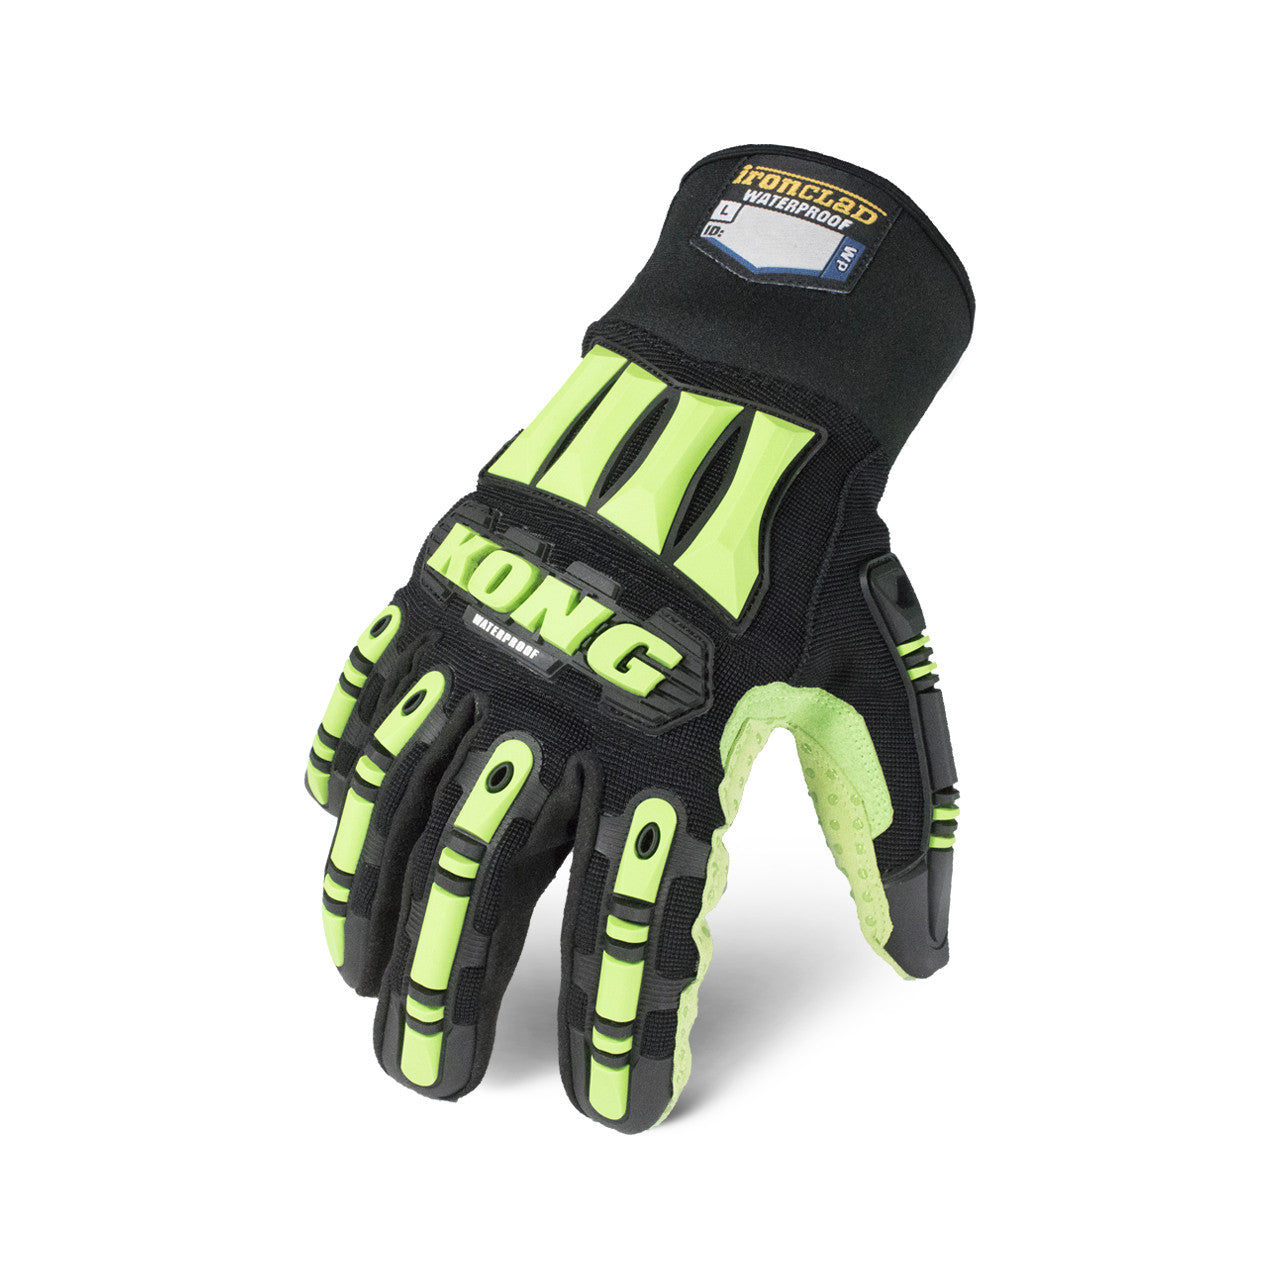 Ironclad Impact Resistant Gloves,XL/10,10-1/2 inch,PR SDX2W-05-XL